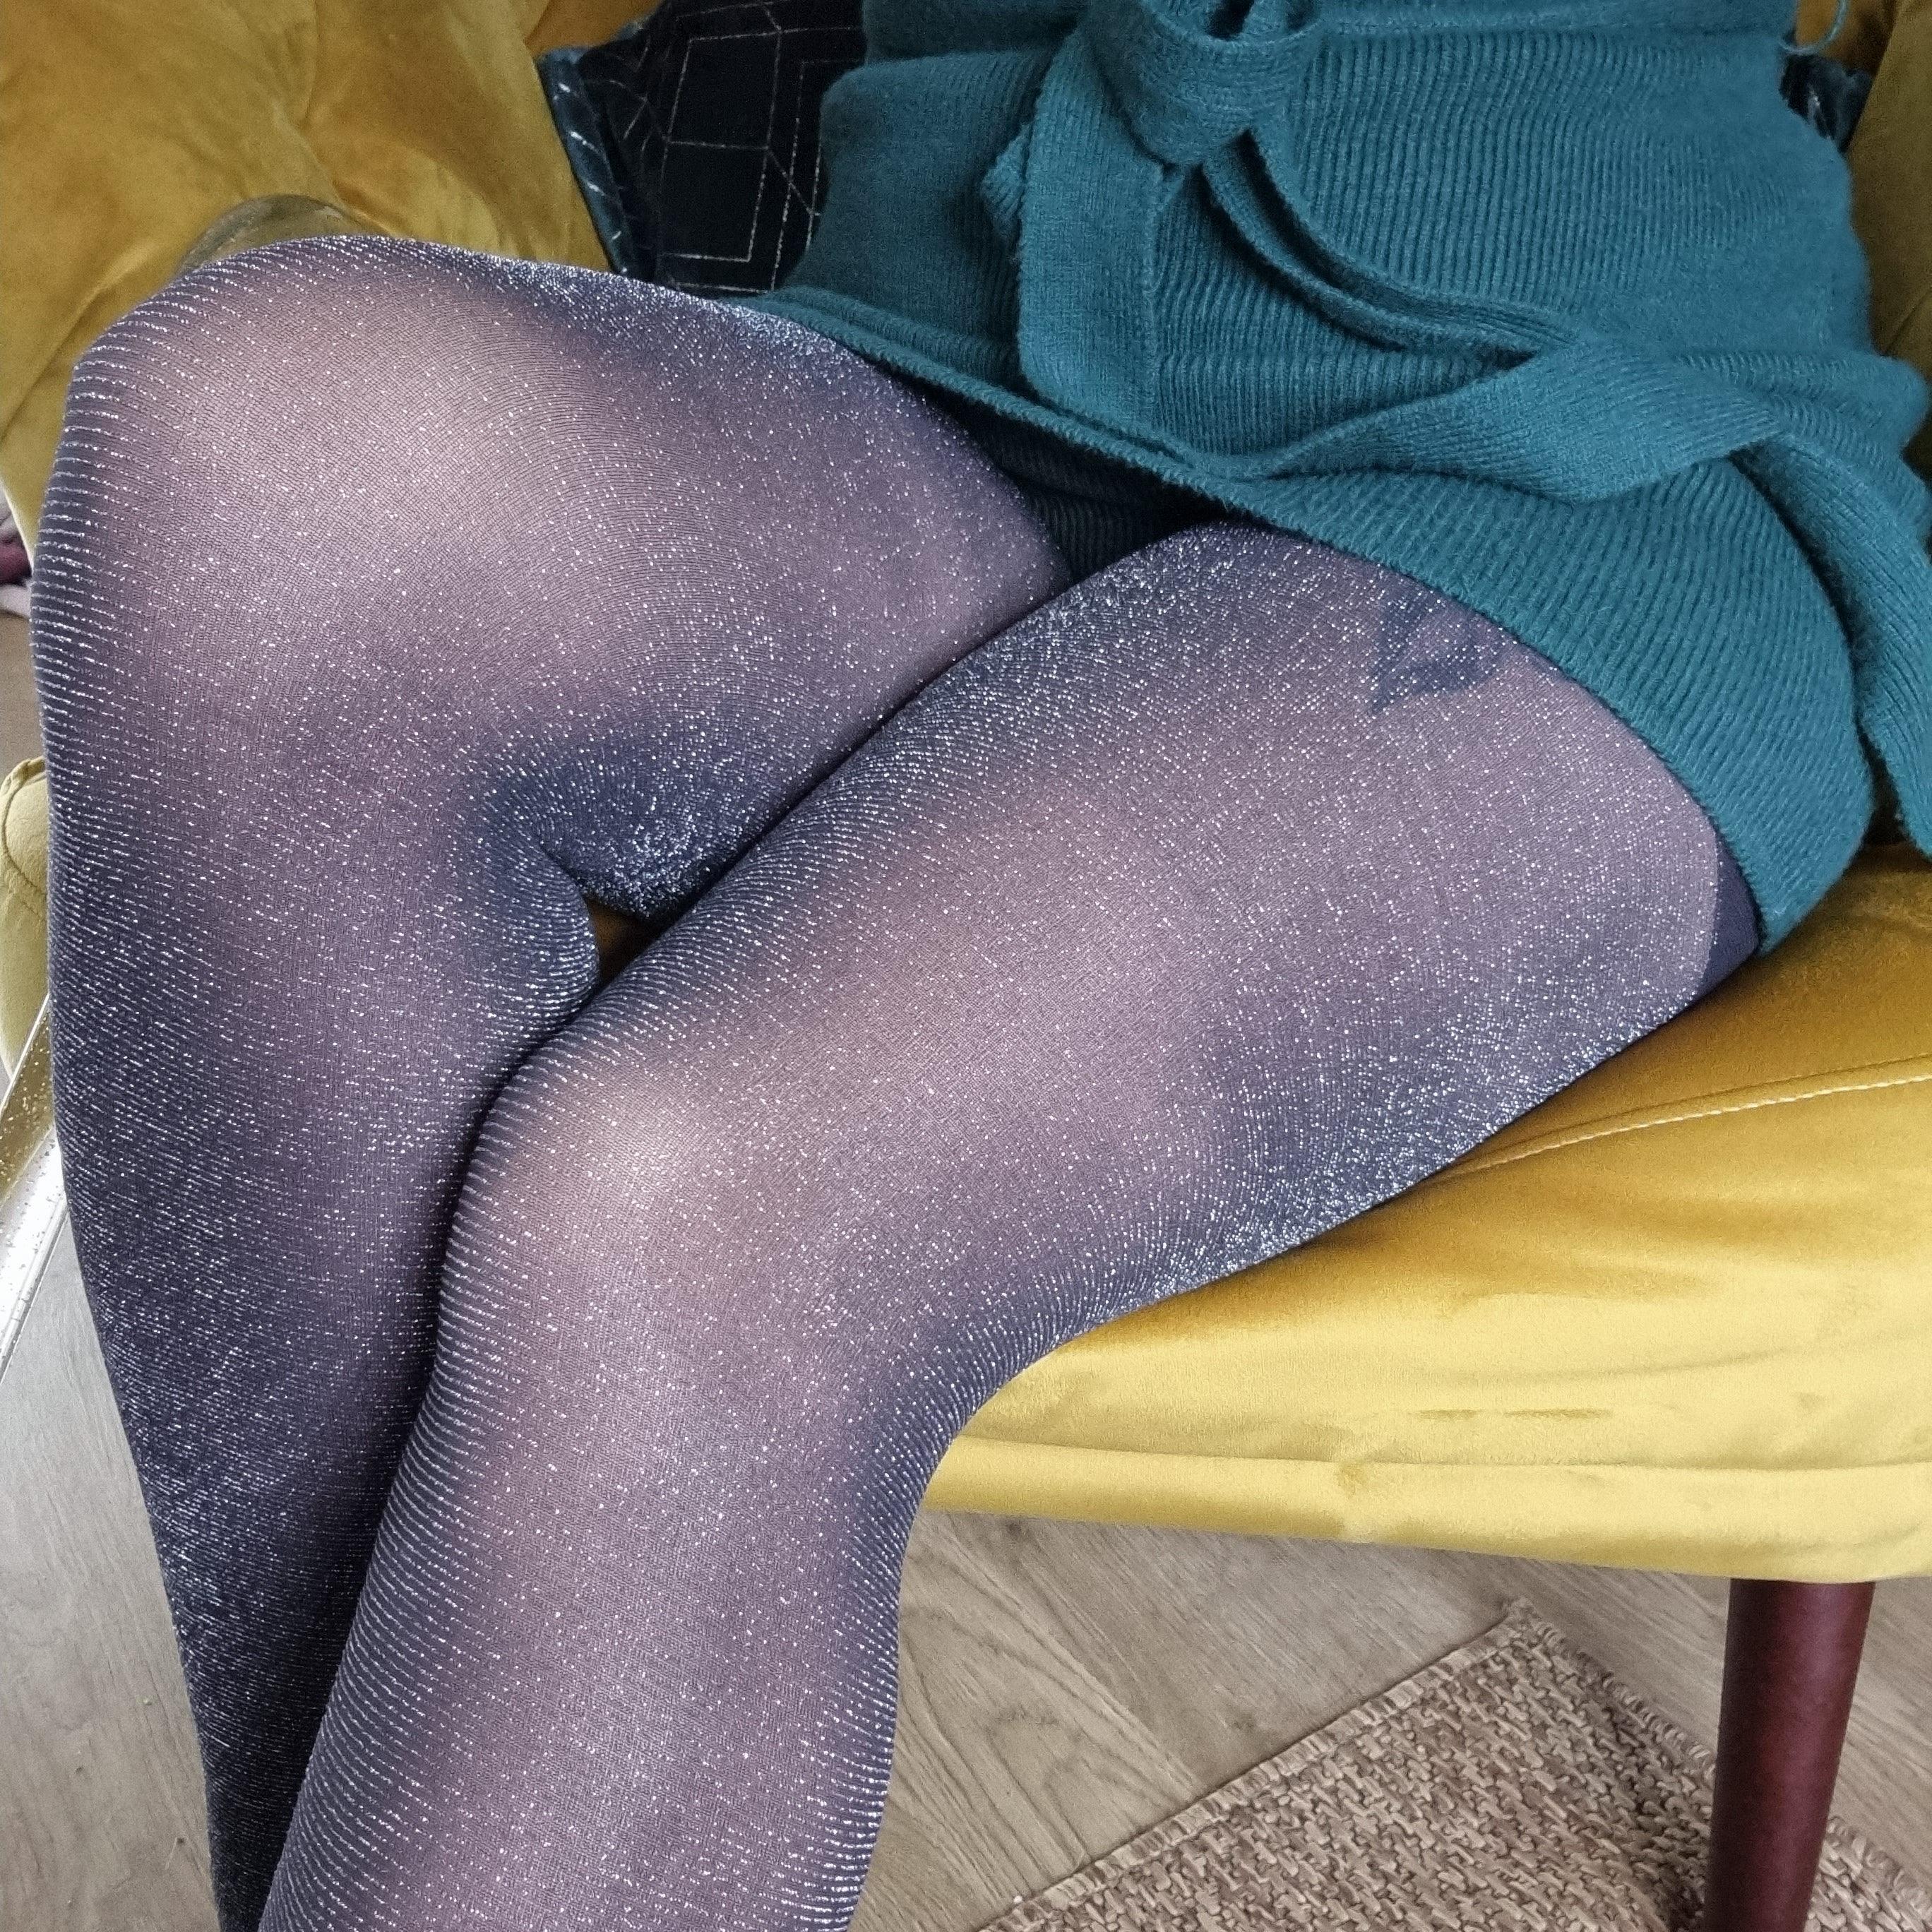 Kaiia ribbed knit sheer legging co-ord in black | ASOS